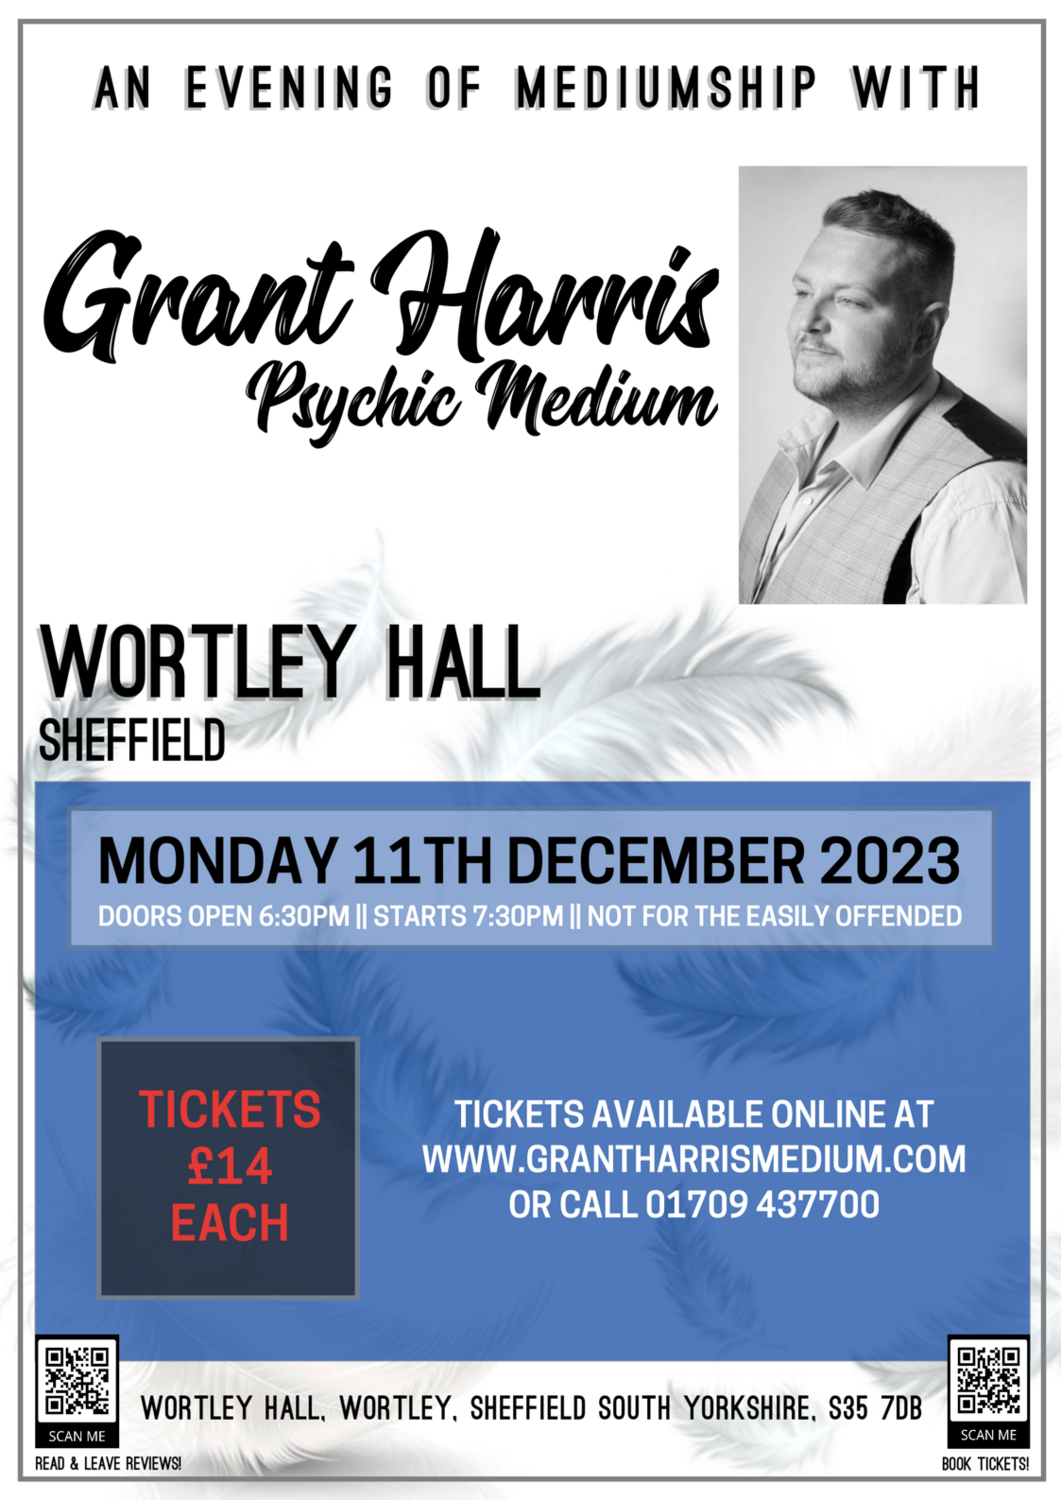 Wortley Hall, Wortley, Sheffield, Monday 11th December 2023